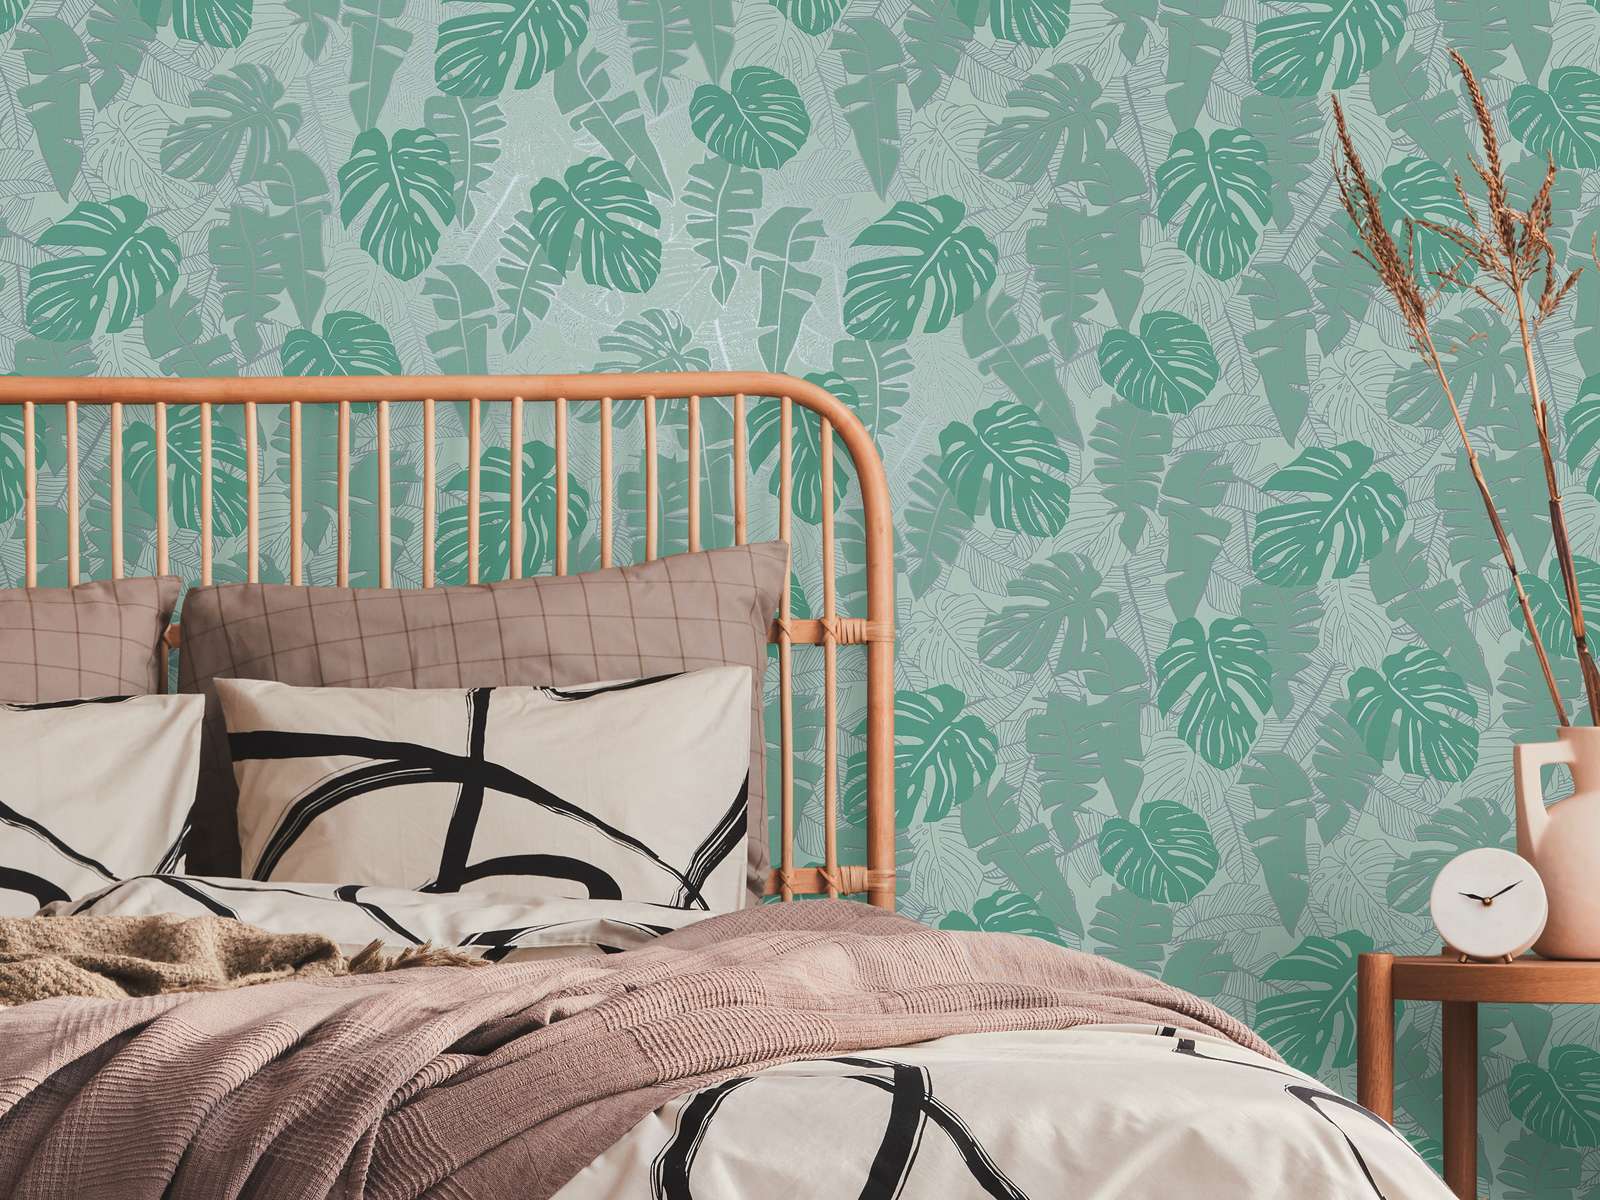             Jungle wallpaper with shiny pattern - green, metallic
        